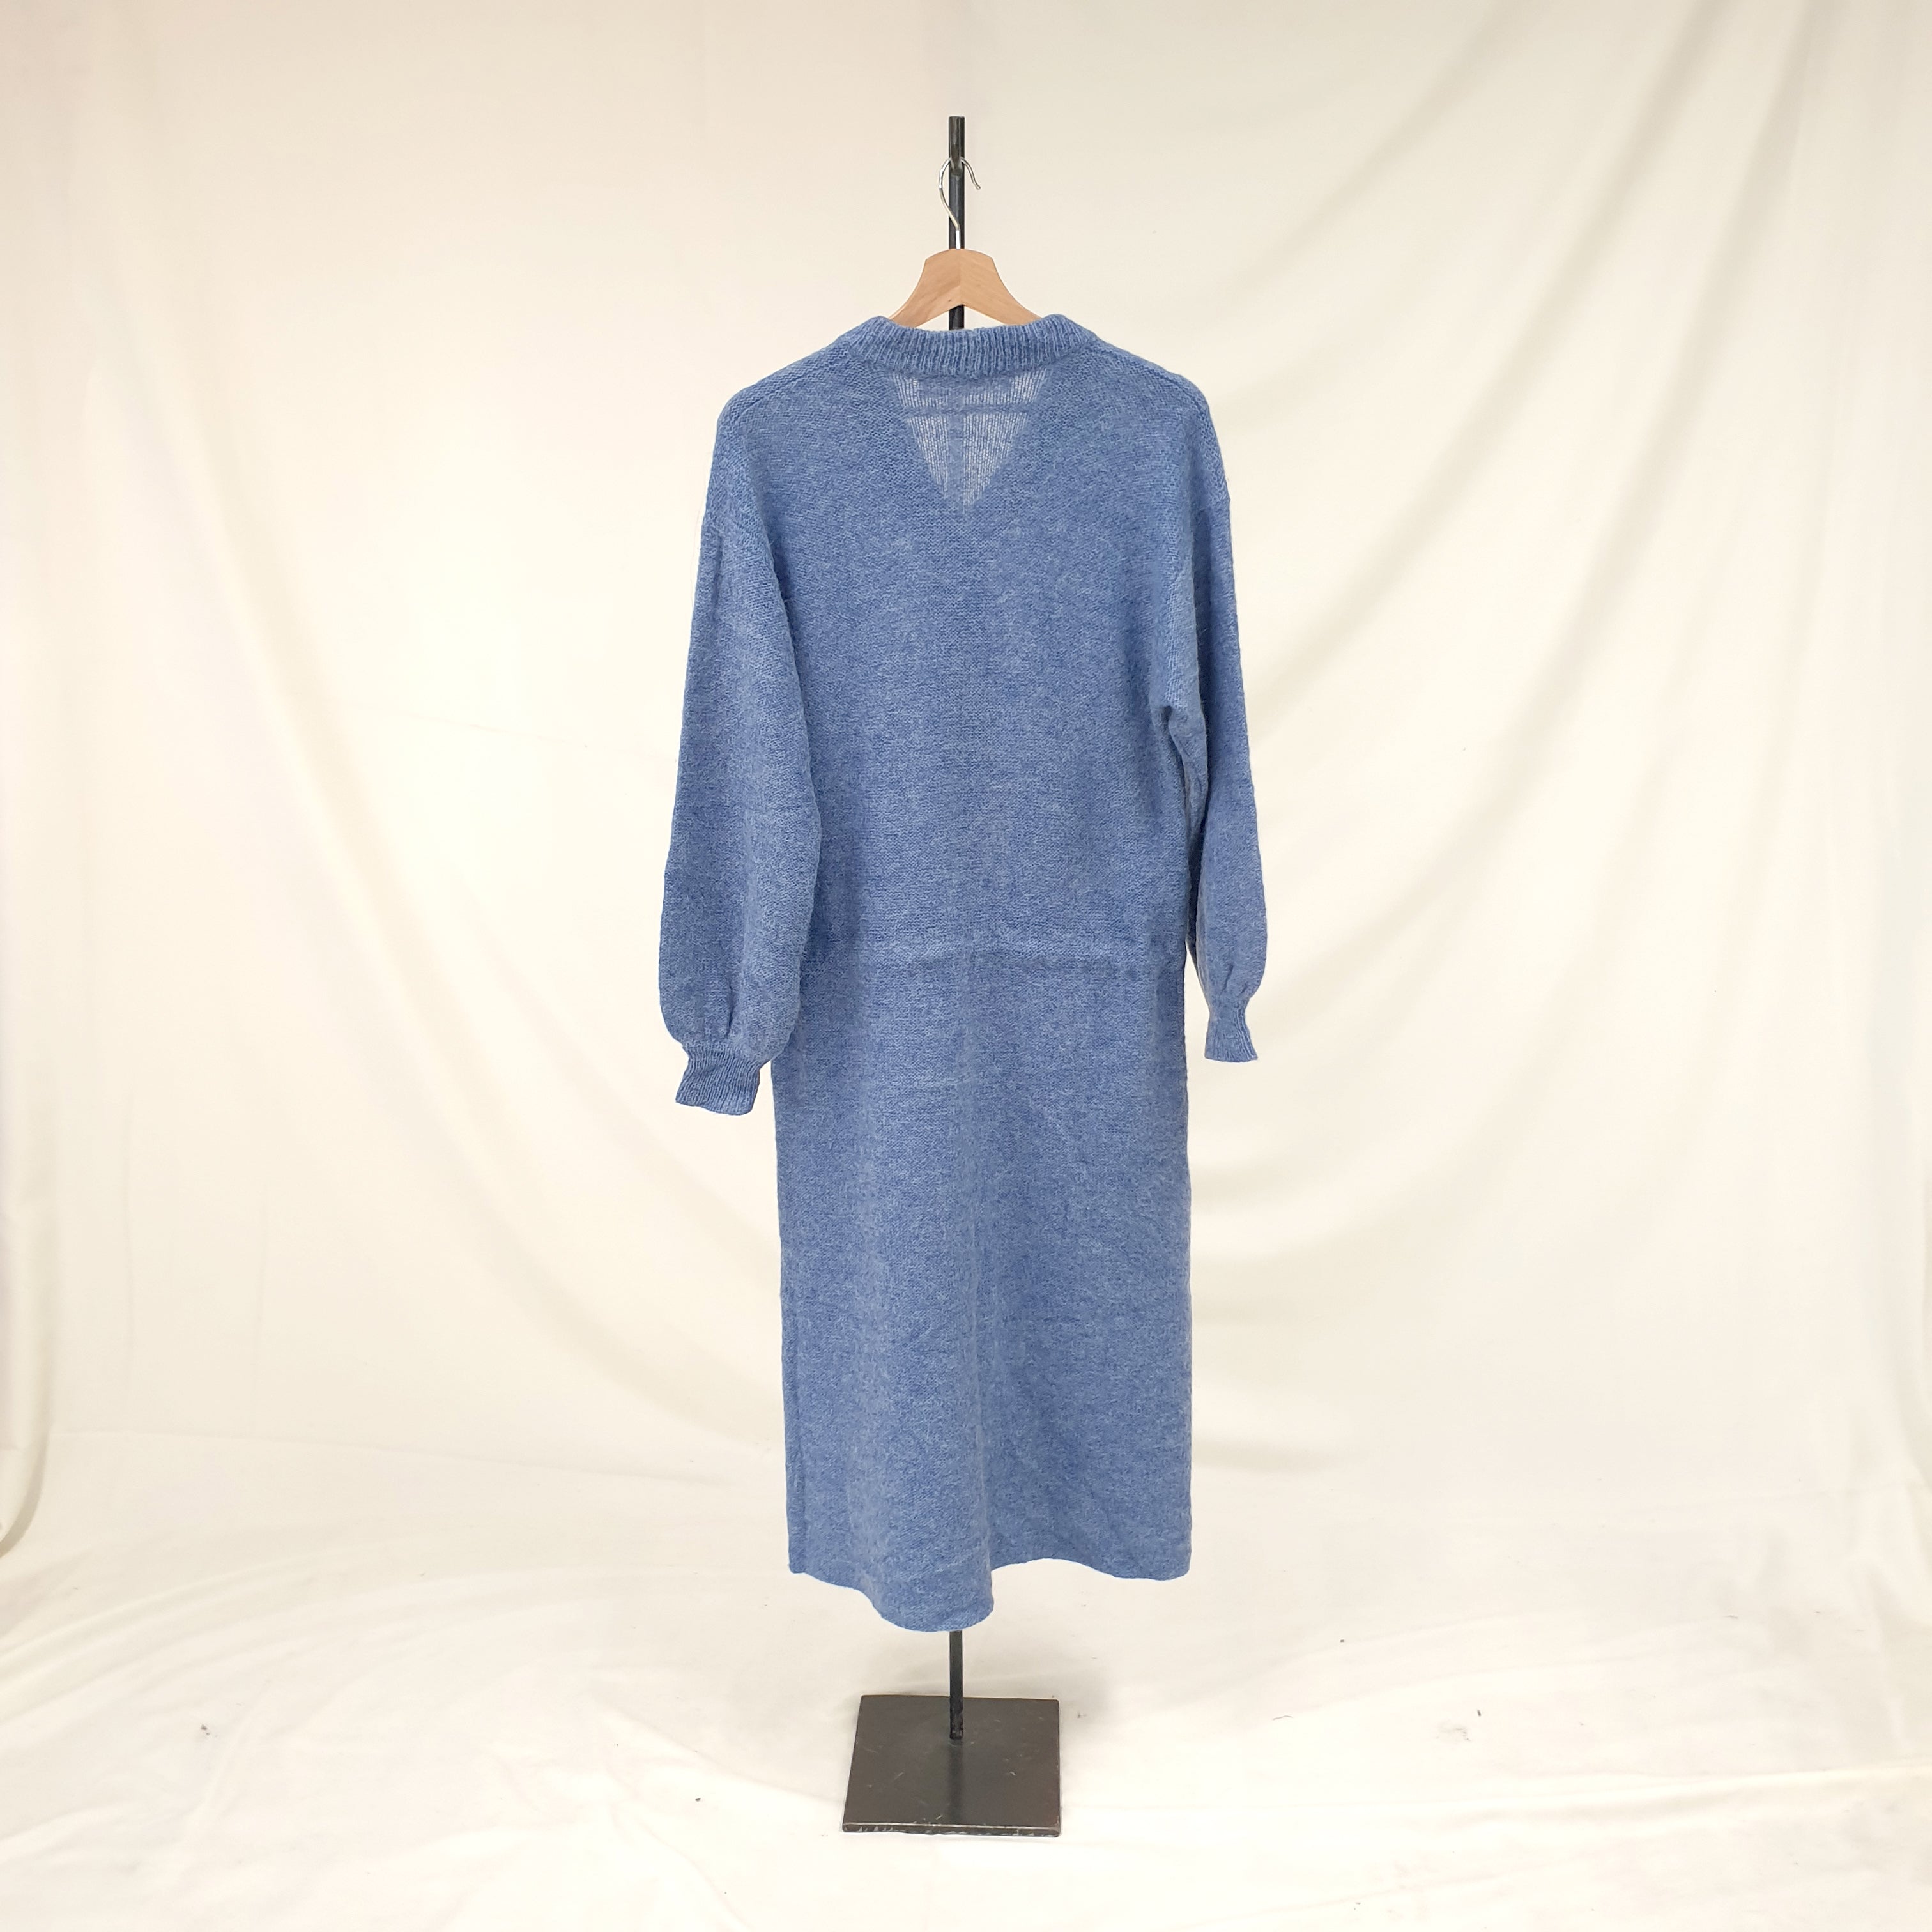 Yves Saint Laurent Knit Jumper/Dress